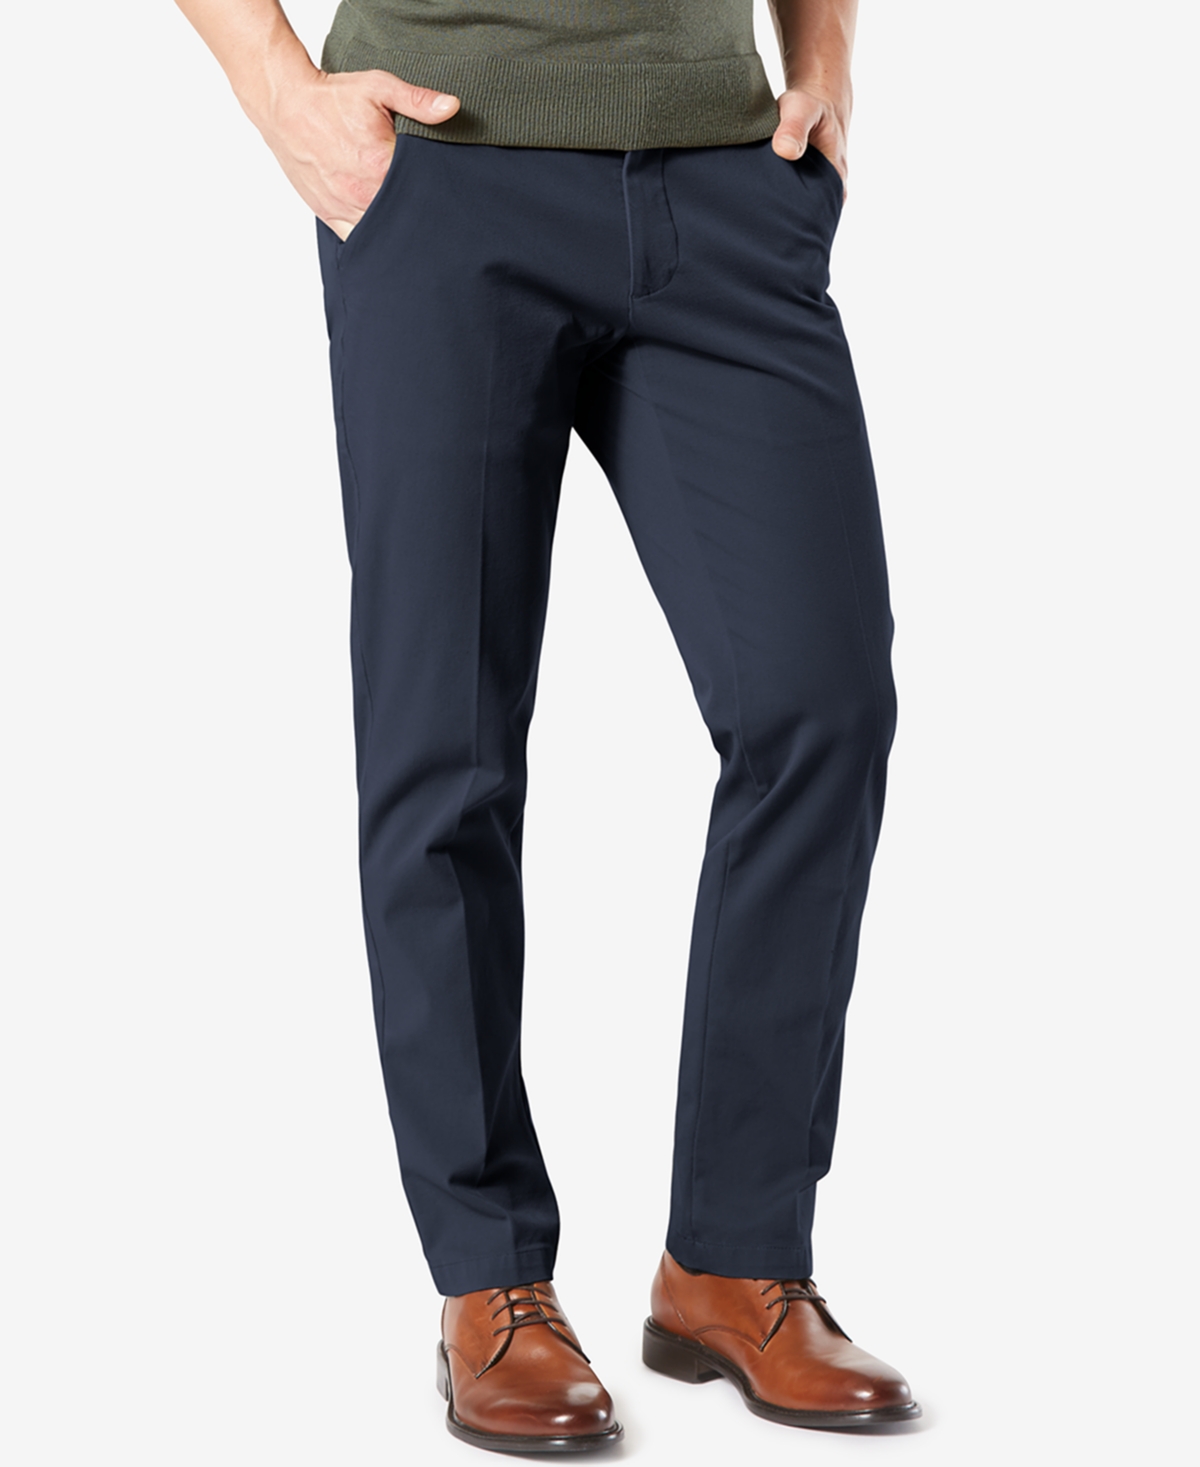 Men's Workday Smart 360 Flex Straight Fit Khaki Stretch Pants - Black